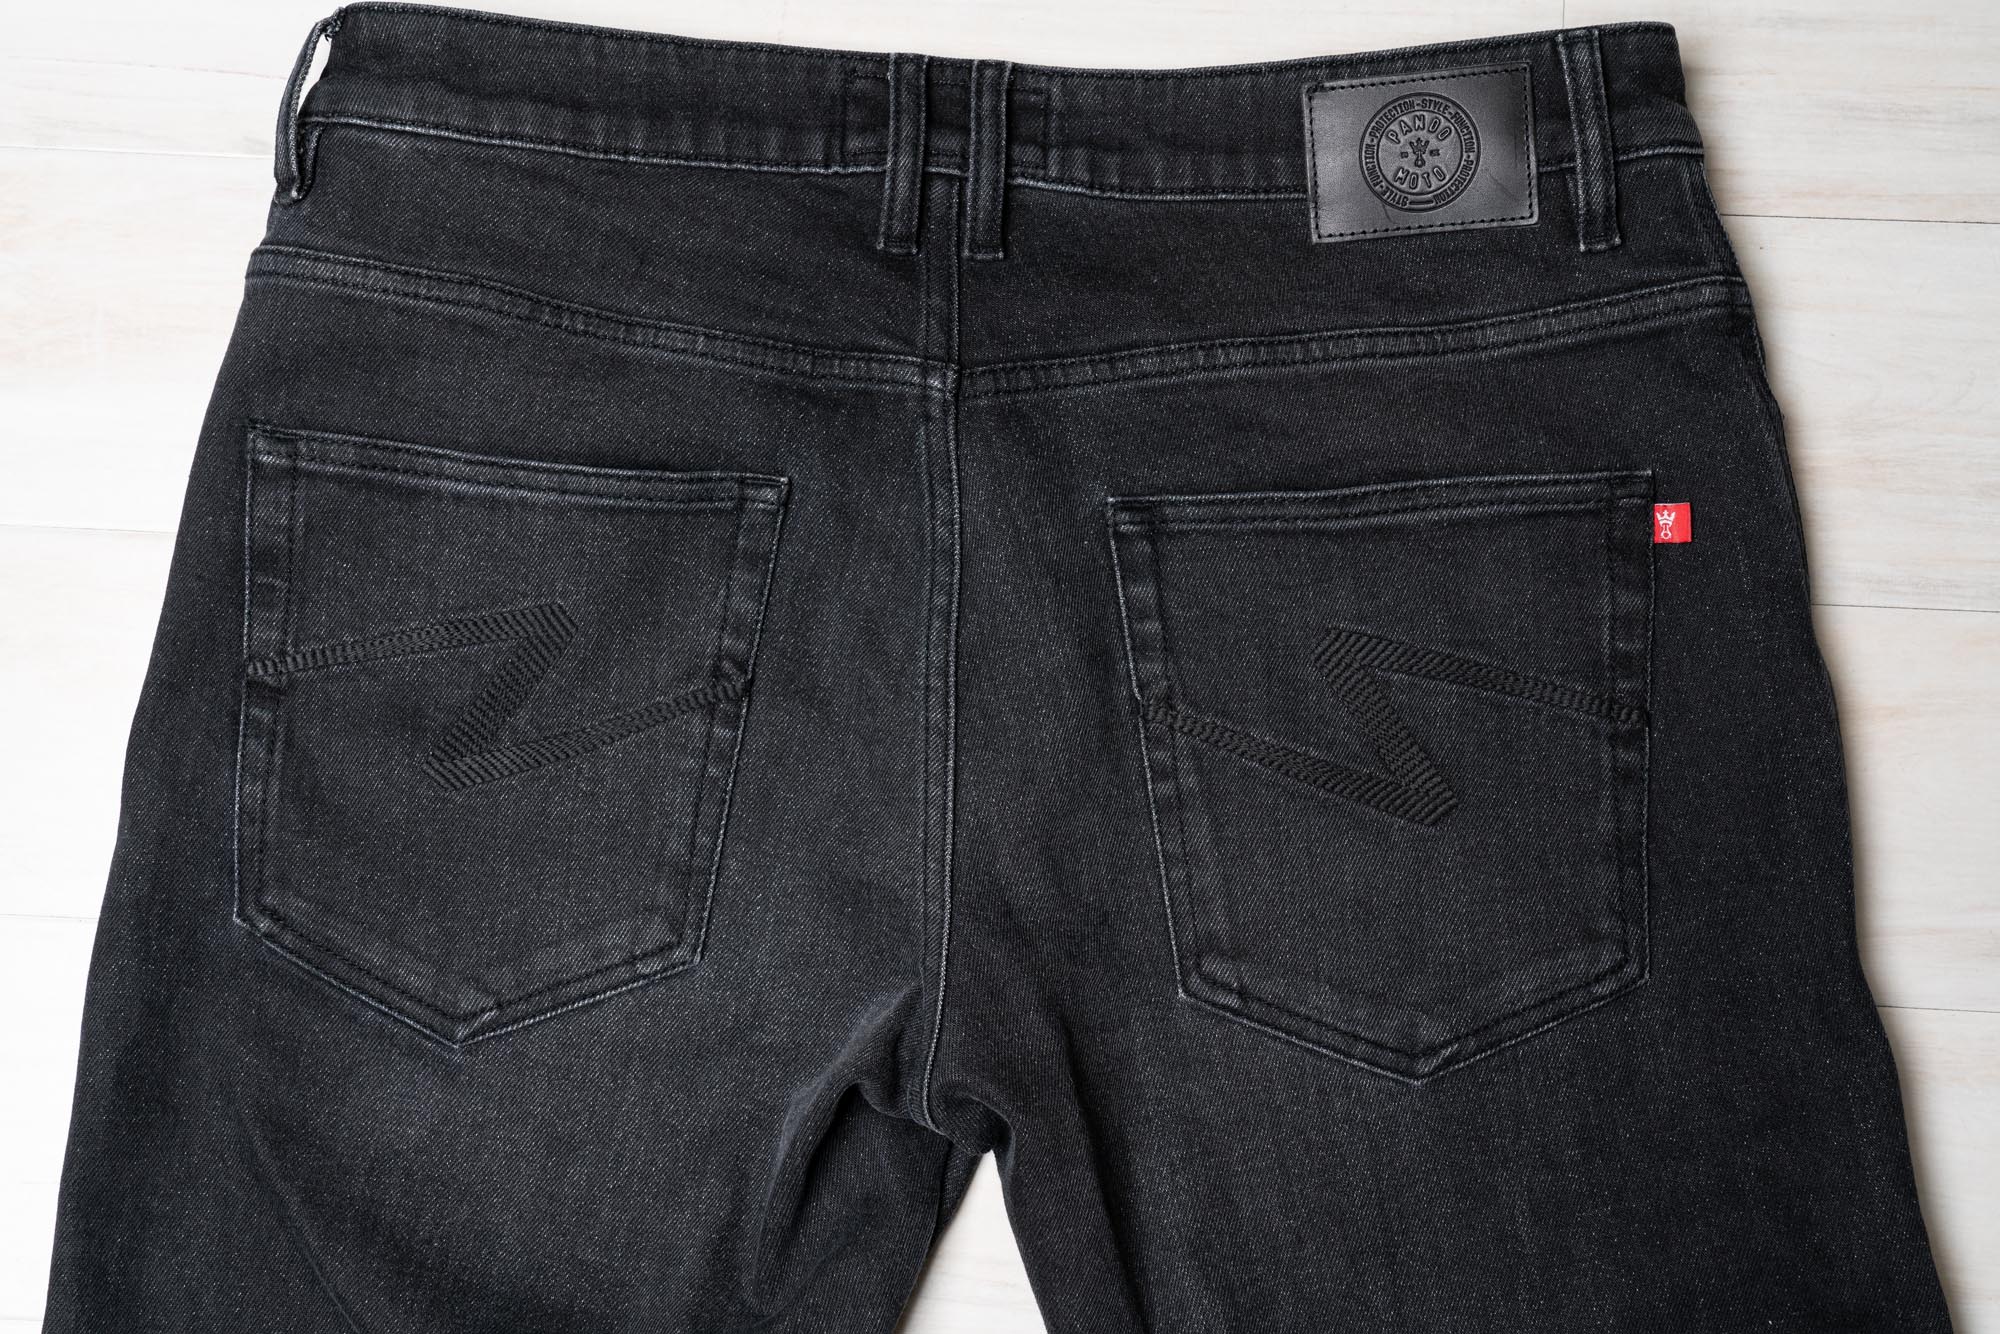 Rear closeup view of Pando Moto jeans